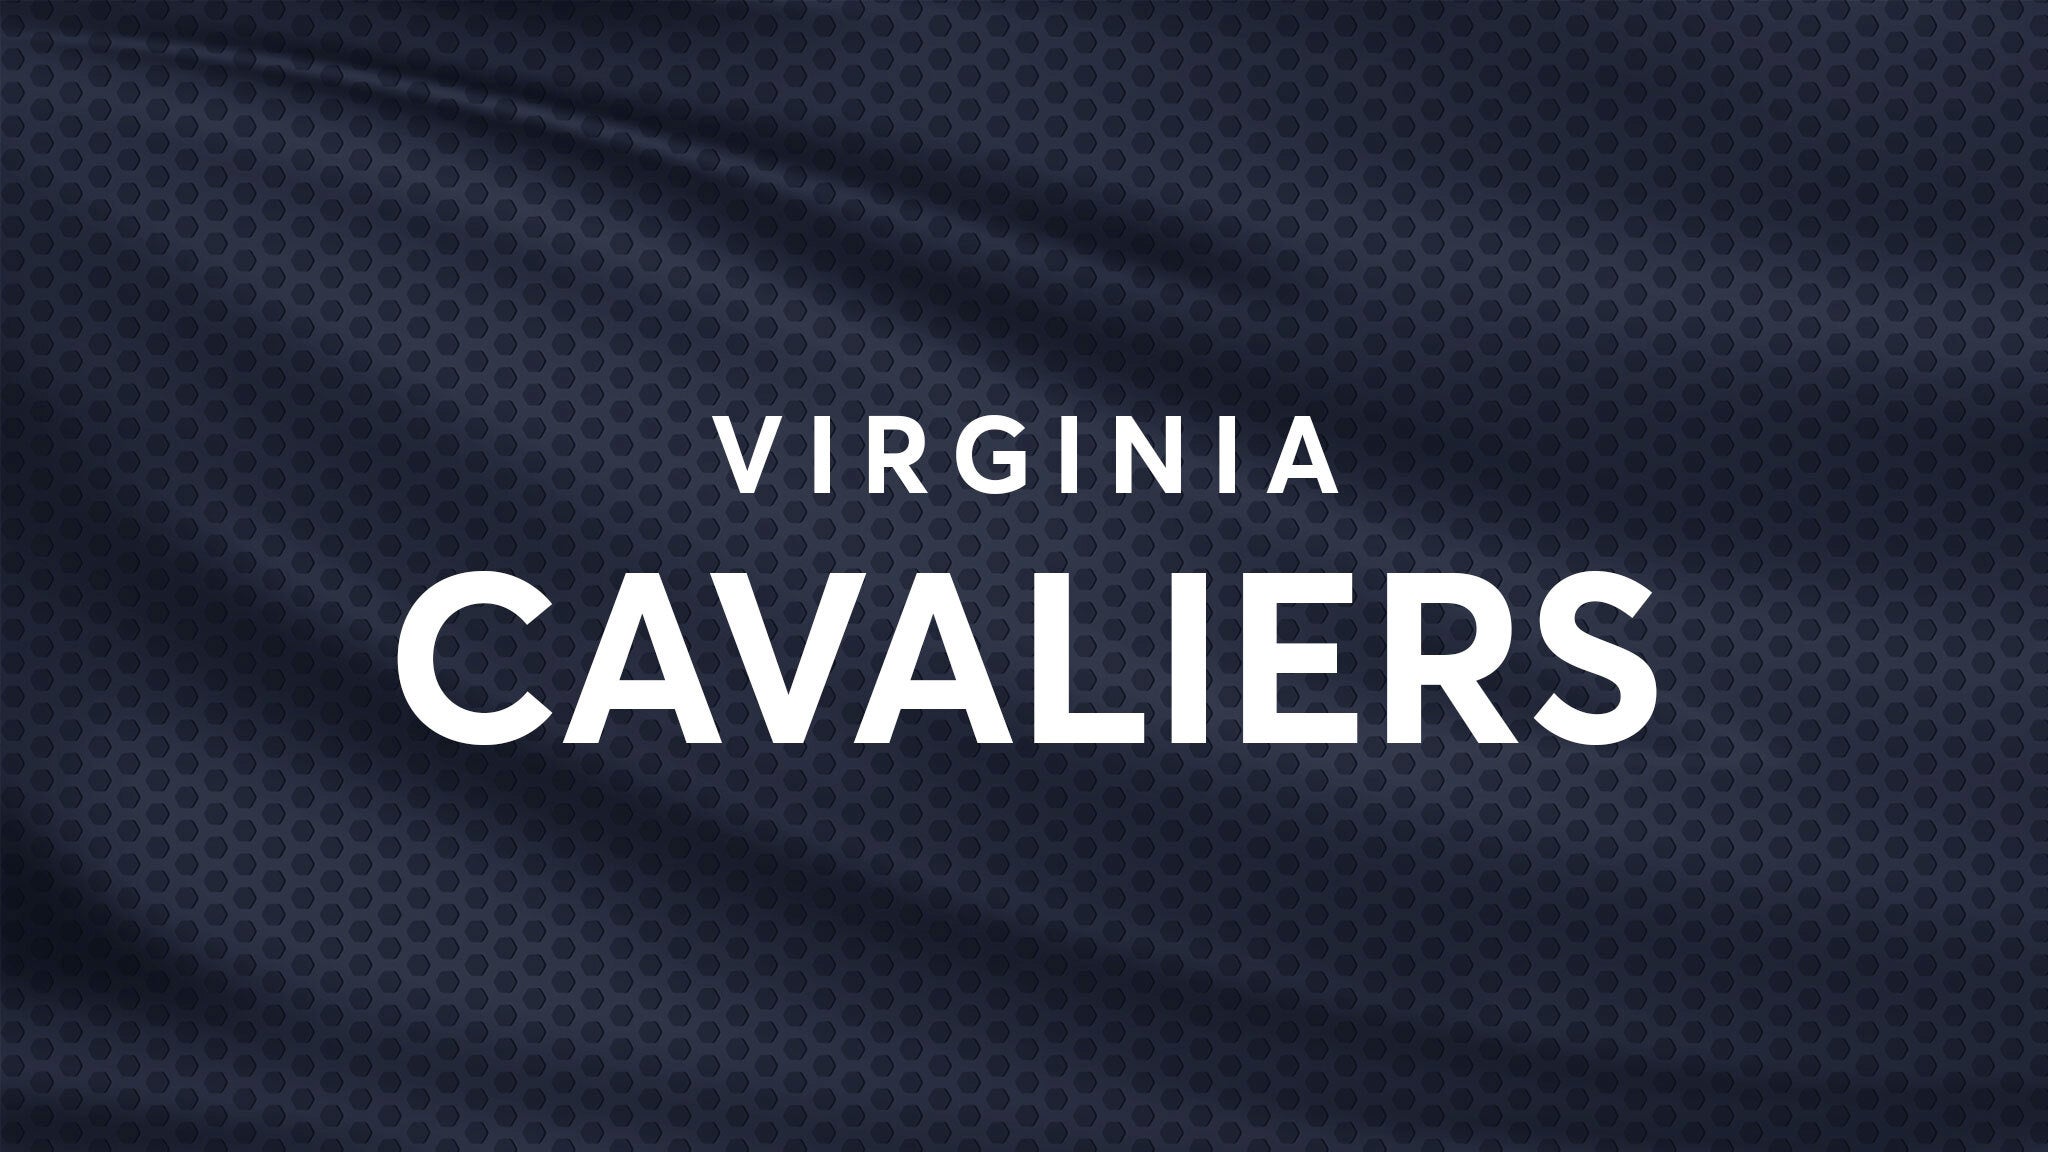 Virginia Cavaliers Football vs. Louisville Cardinals Football hero